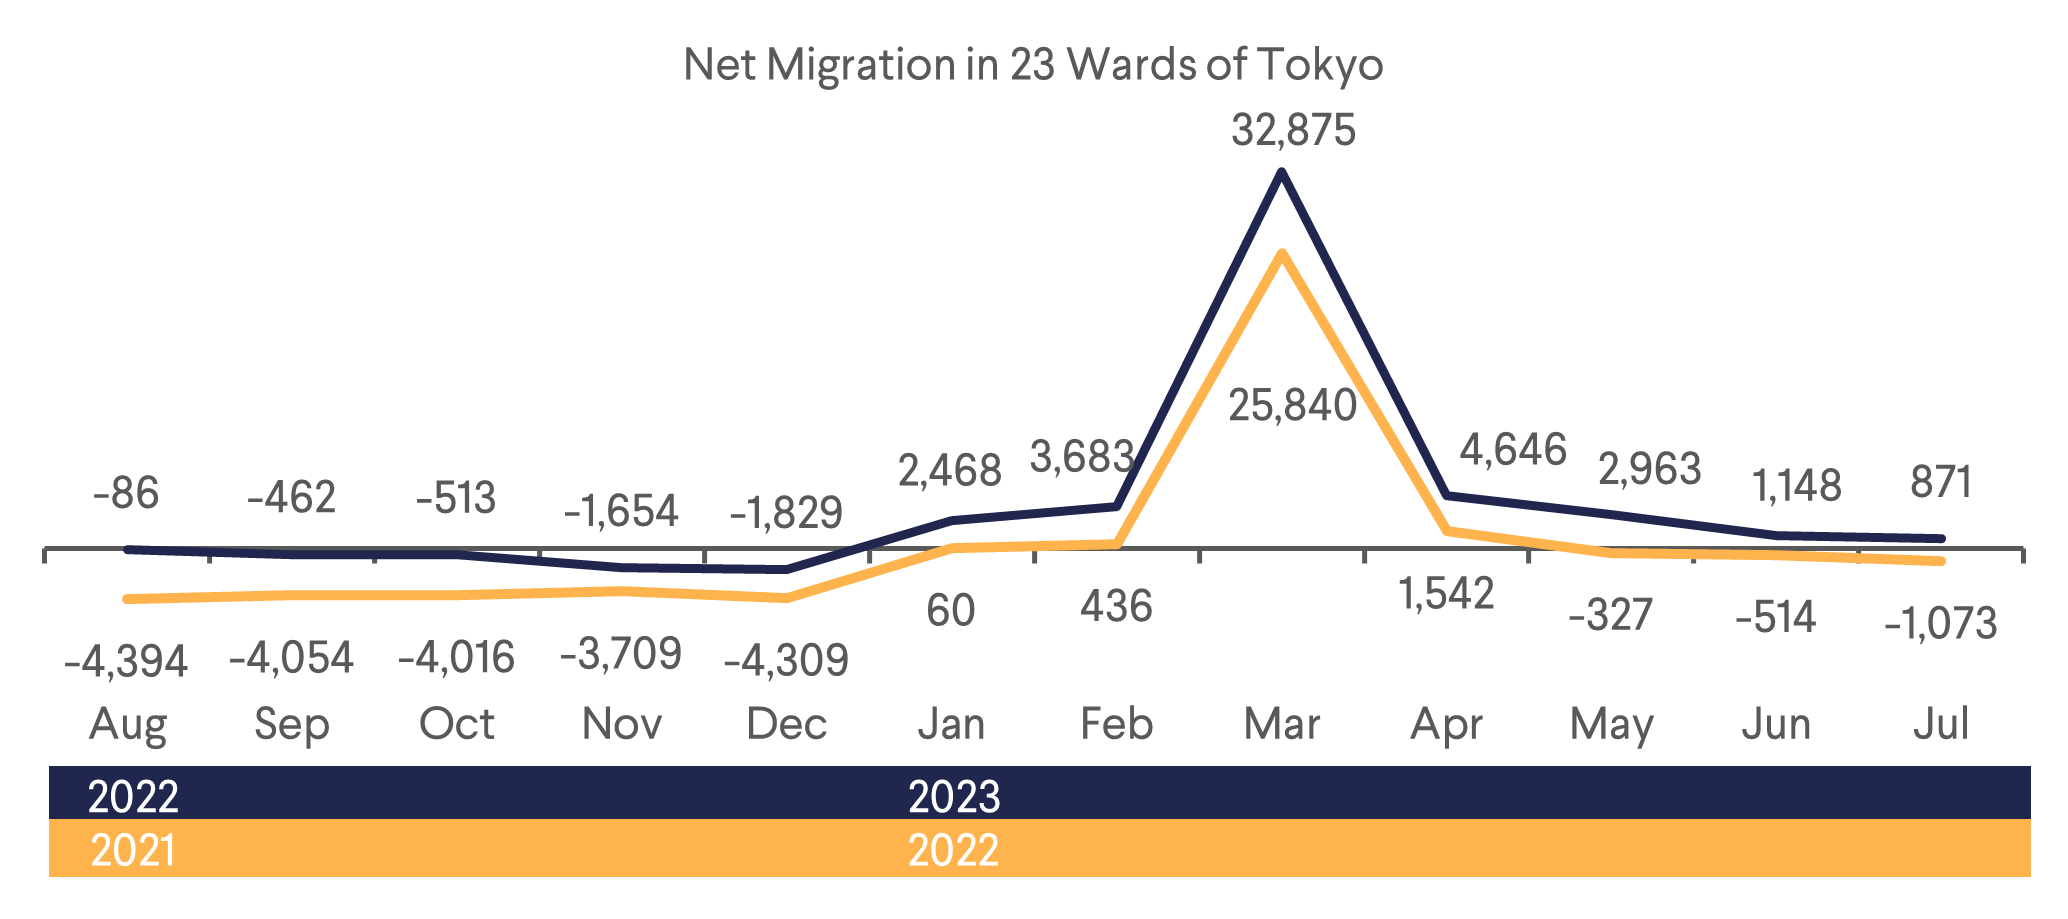 Net Migration in 23 Wards of Tokyo